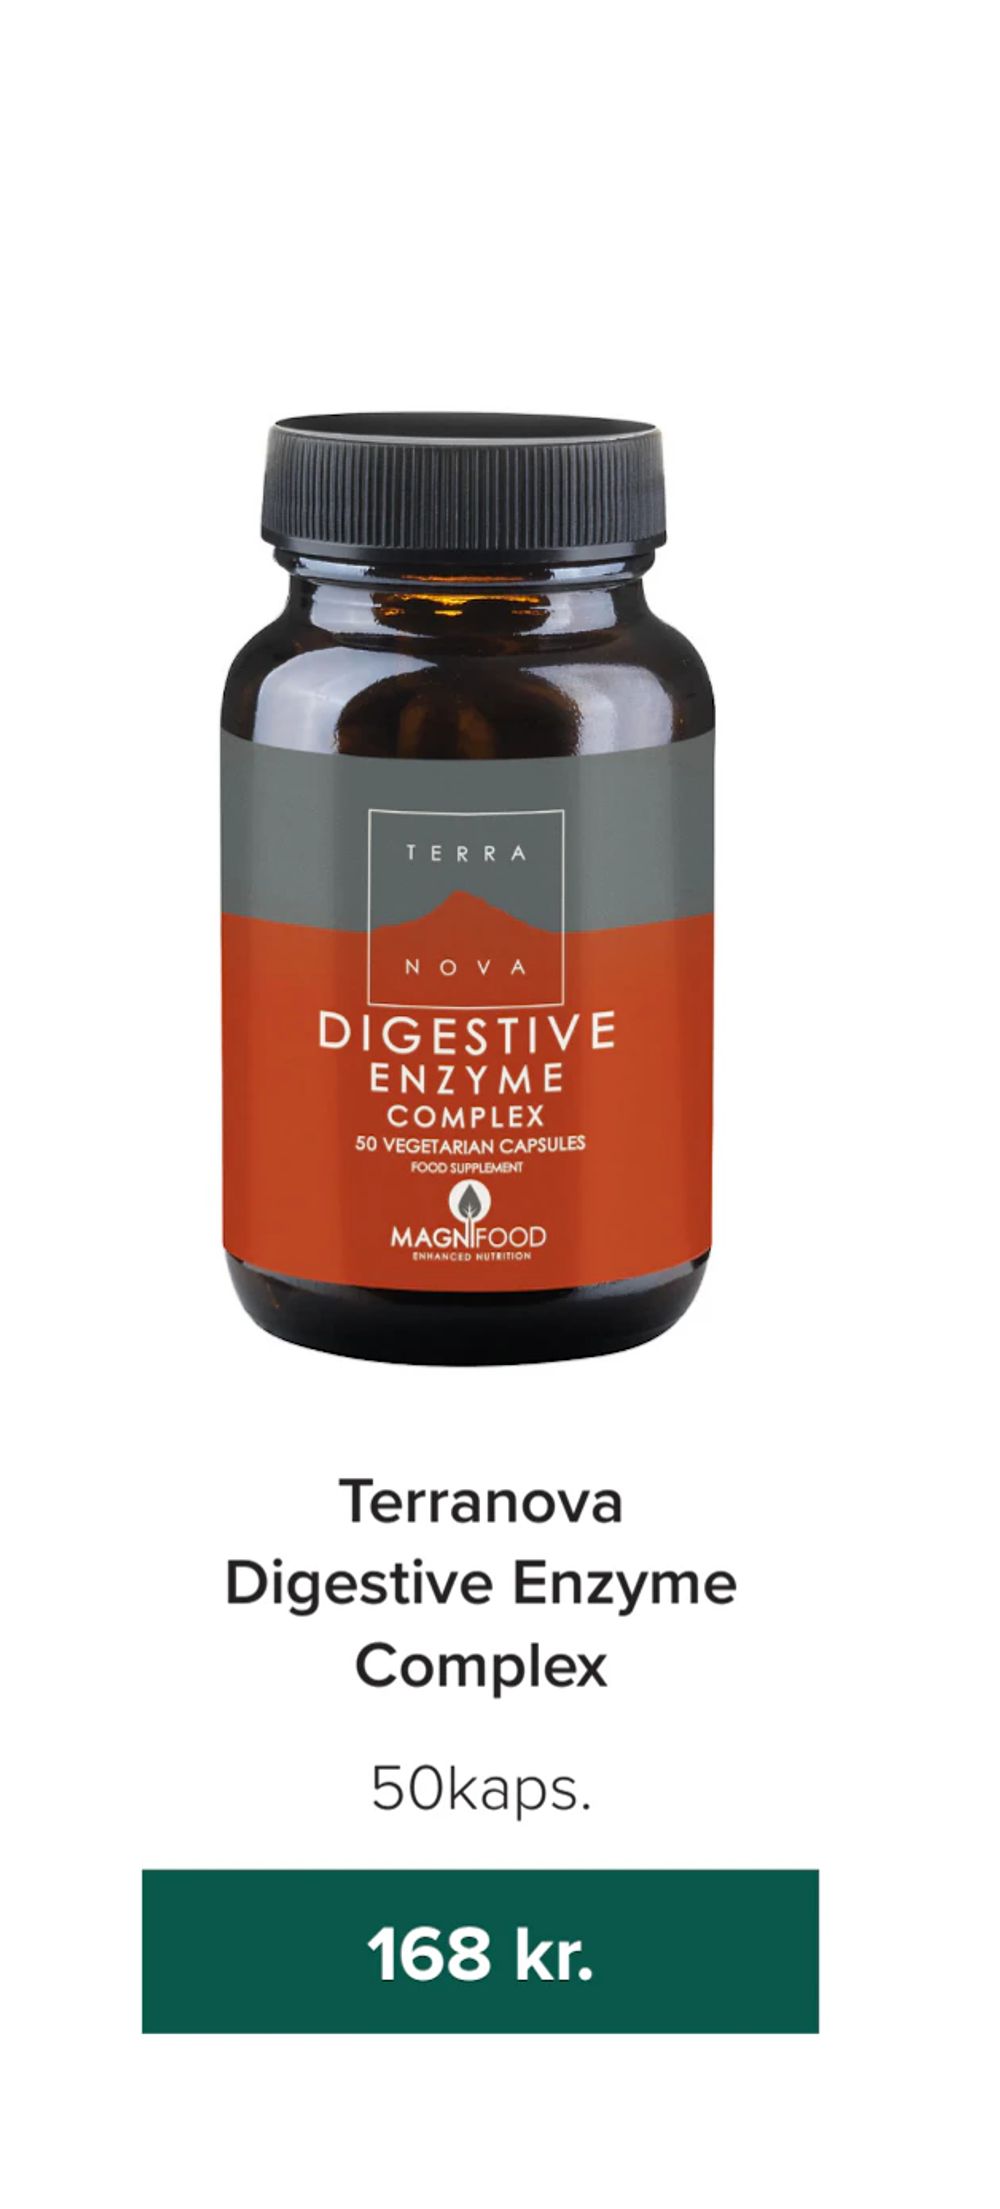 Tilbud på Terranova Digestive Enzyme Complex fra Helsemin til 168 kr.